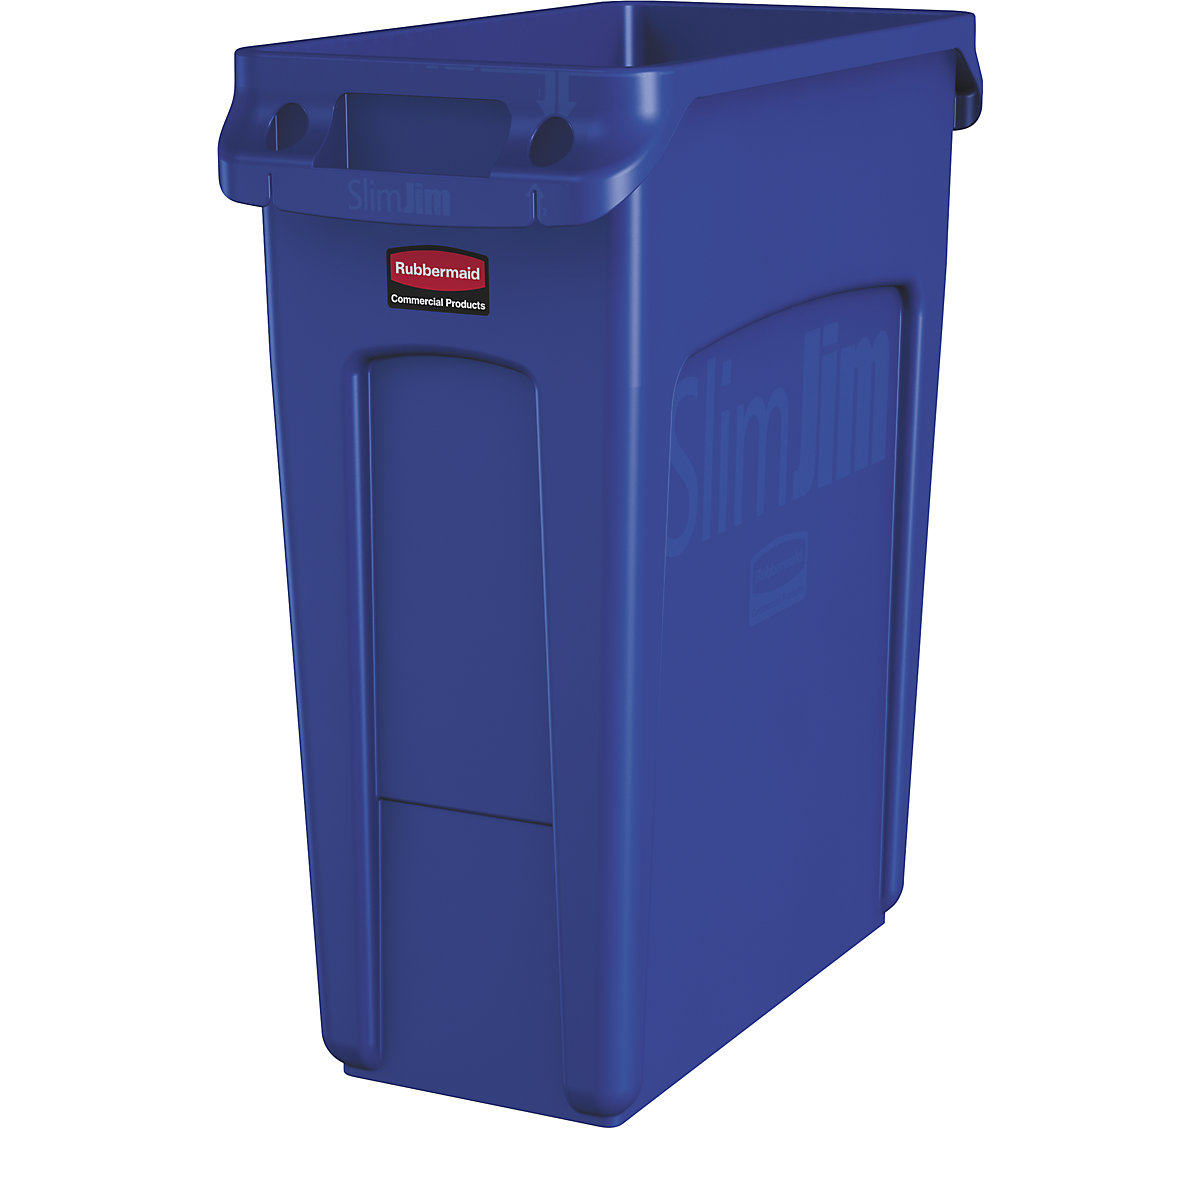 Spremnik za sirovine/kanta za otpad SLIM JIM® – Rubbermaid, volumen 60 l, s kanalima za ventilaciju, u plavoj boji-13